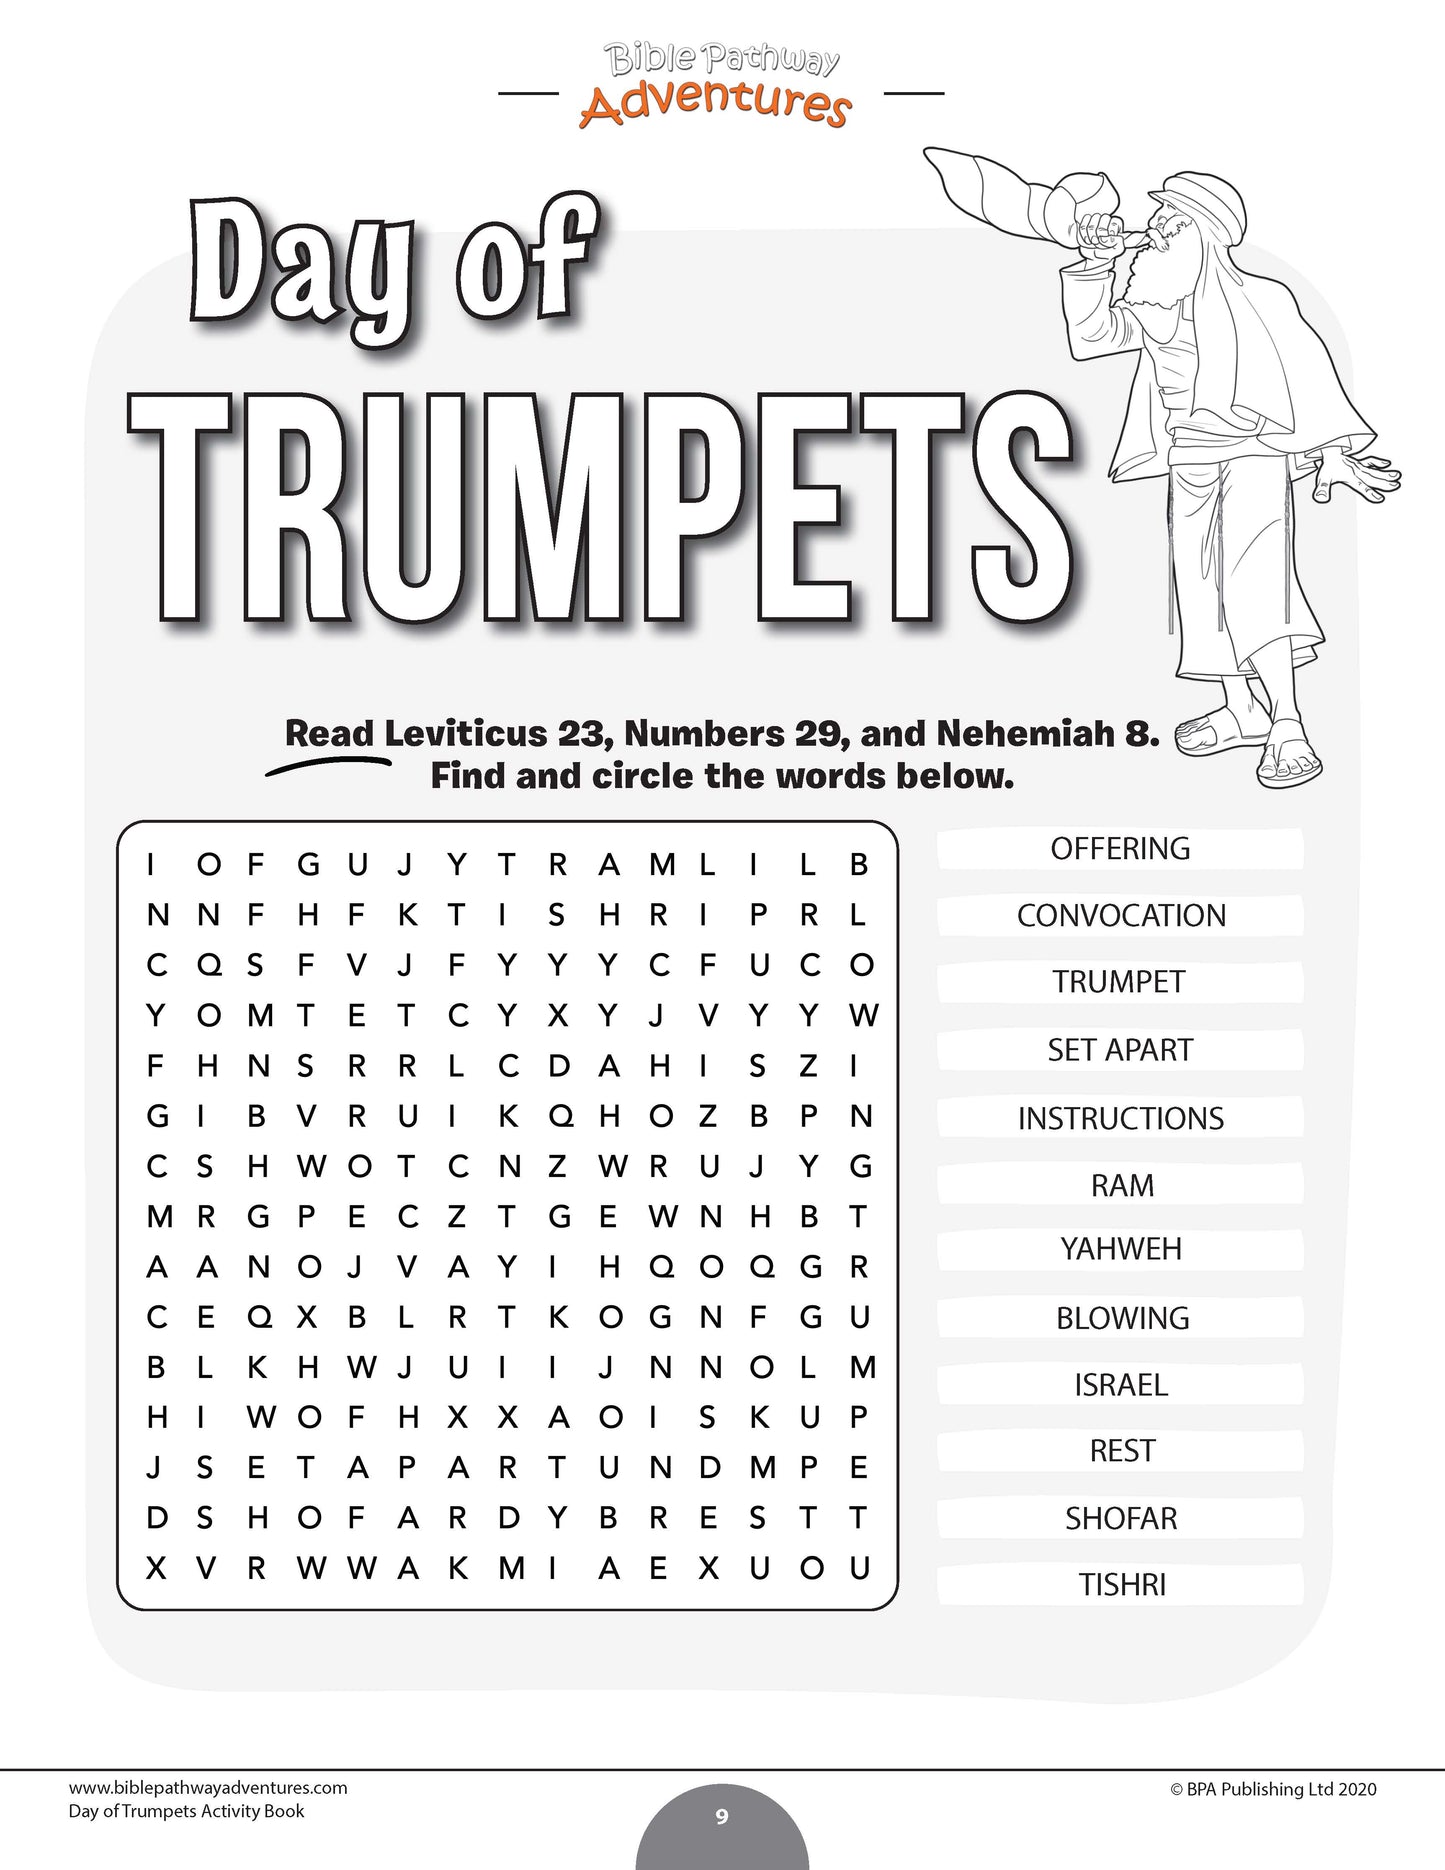 Day of Trumpets (Yom Teru'ah) Activity Book (PDF)